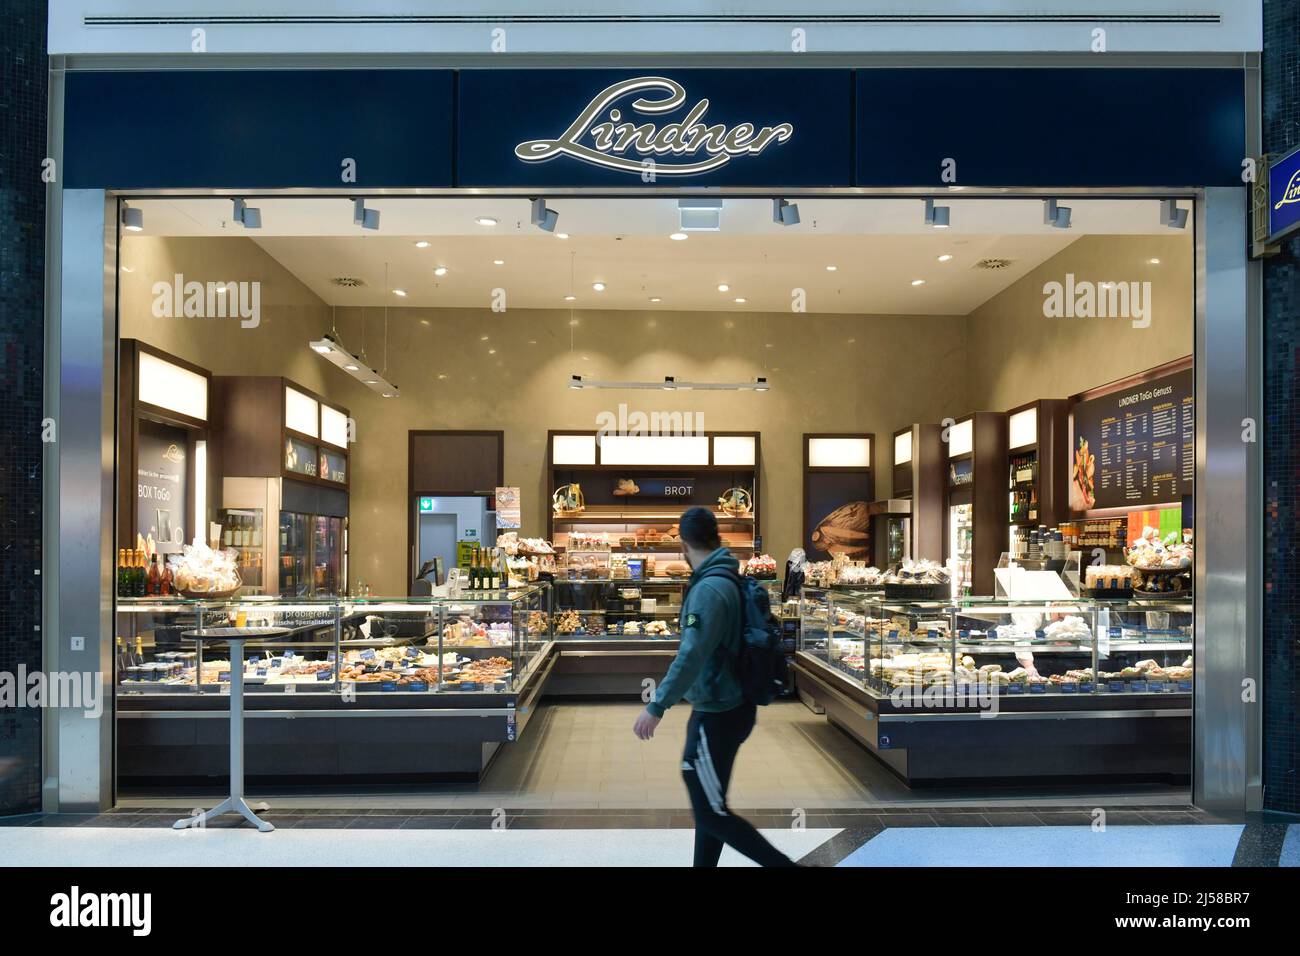 Lindner, Alexa department stores', Grunerstrasse, Mitte, Berlin, Germany  Stock Photo - Alamy